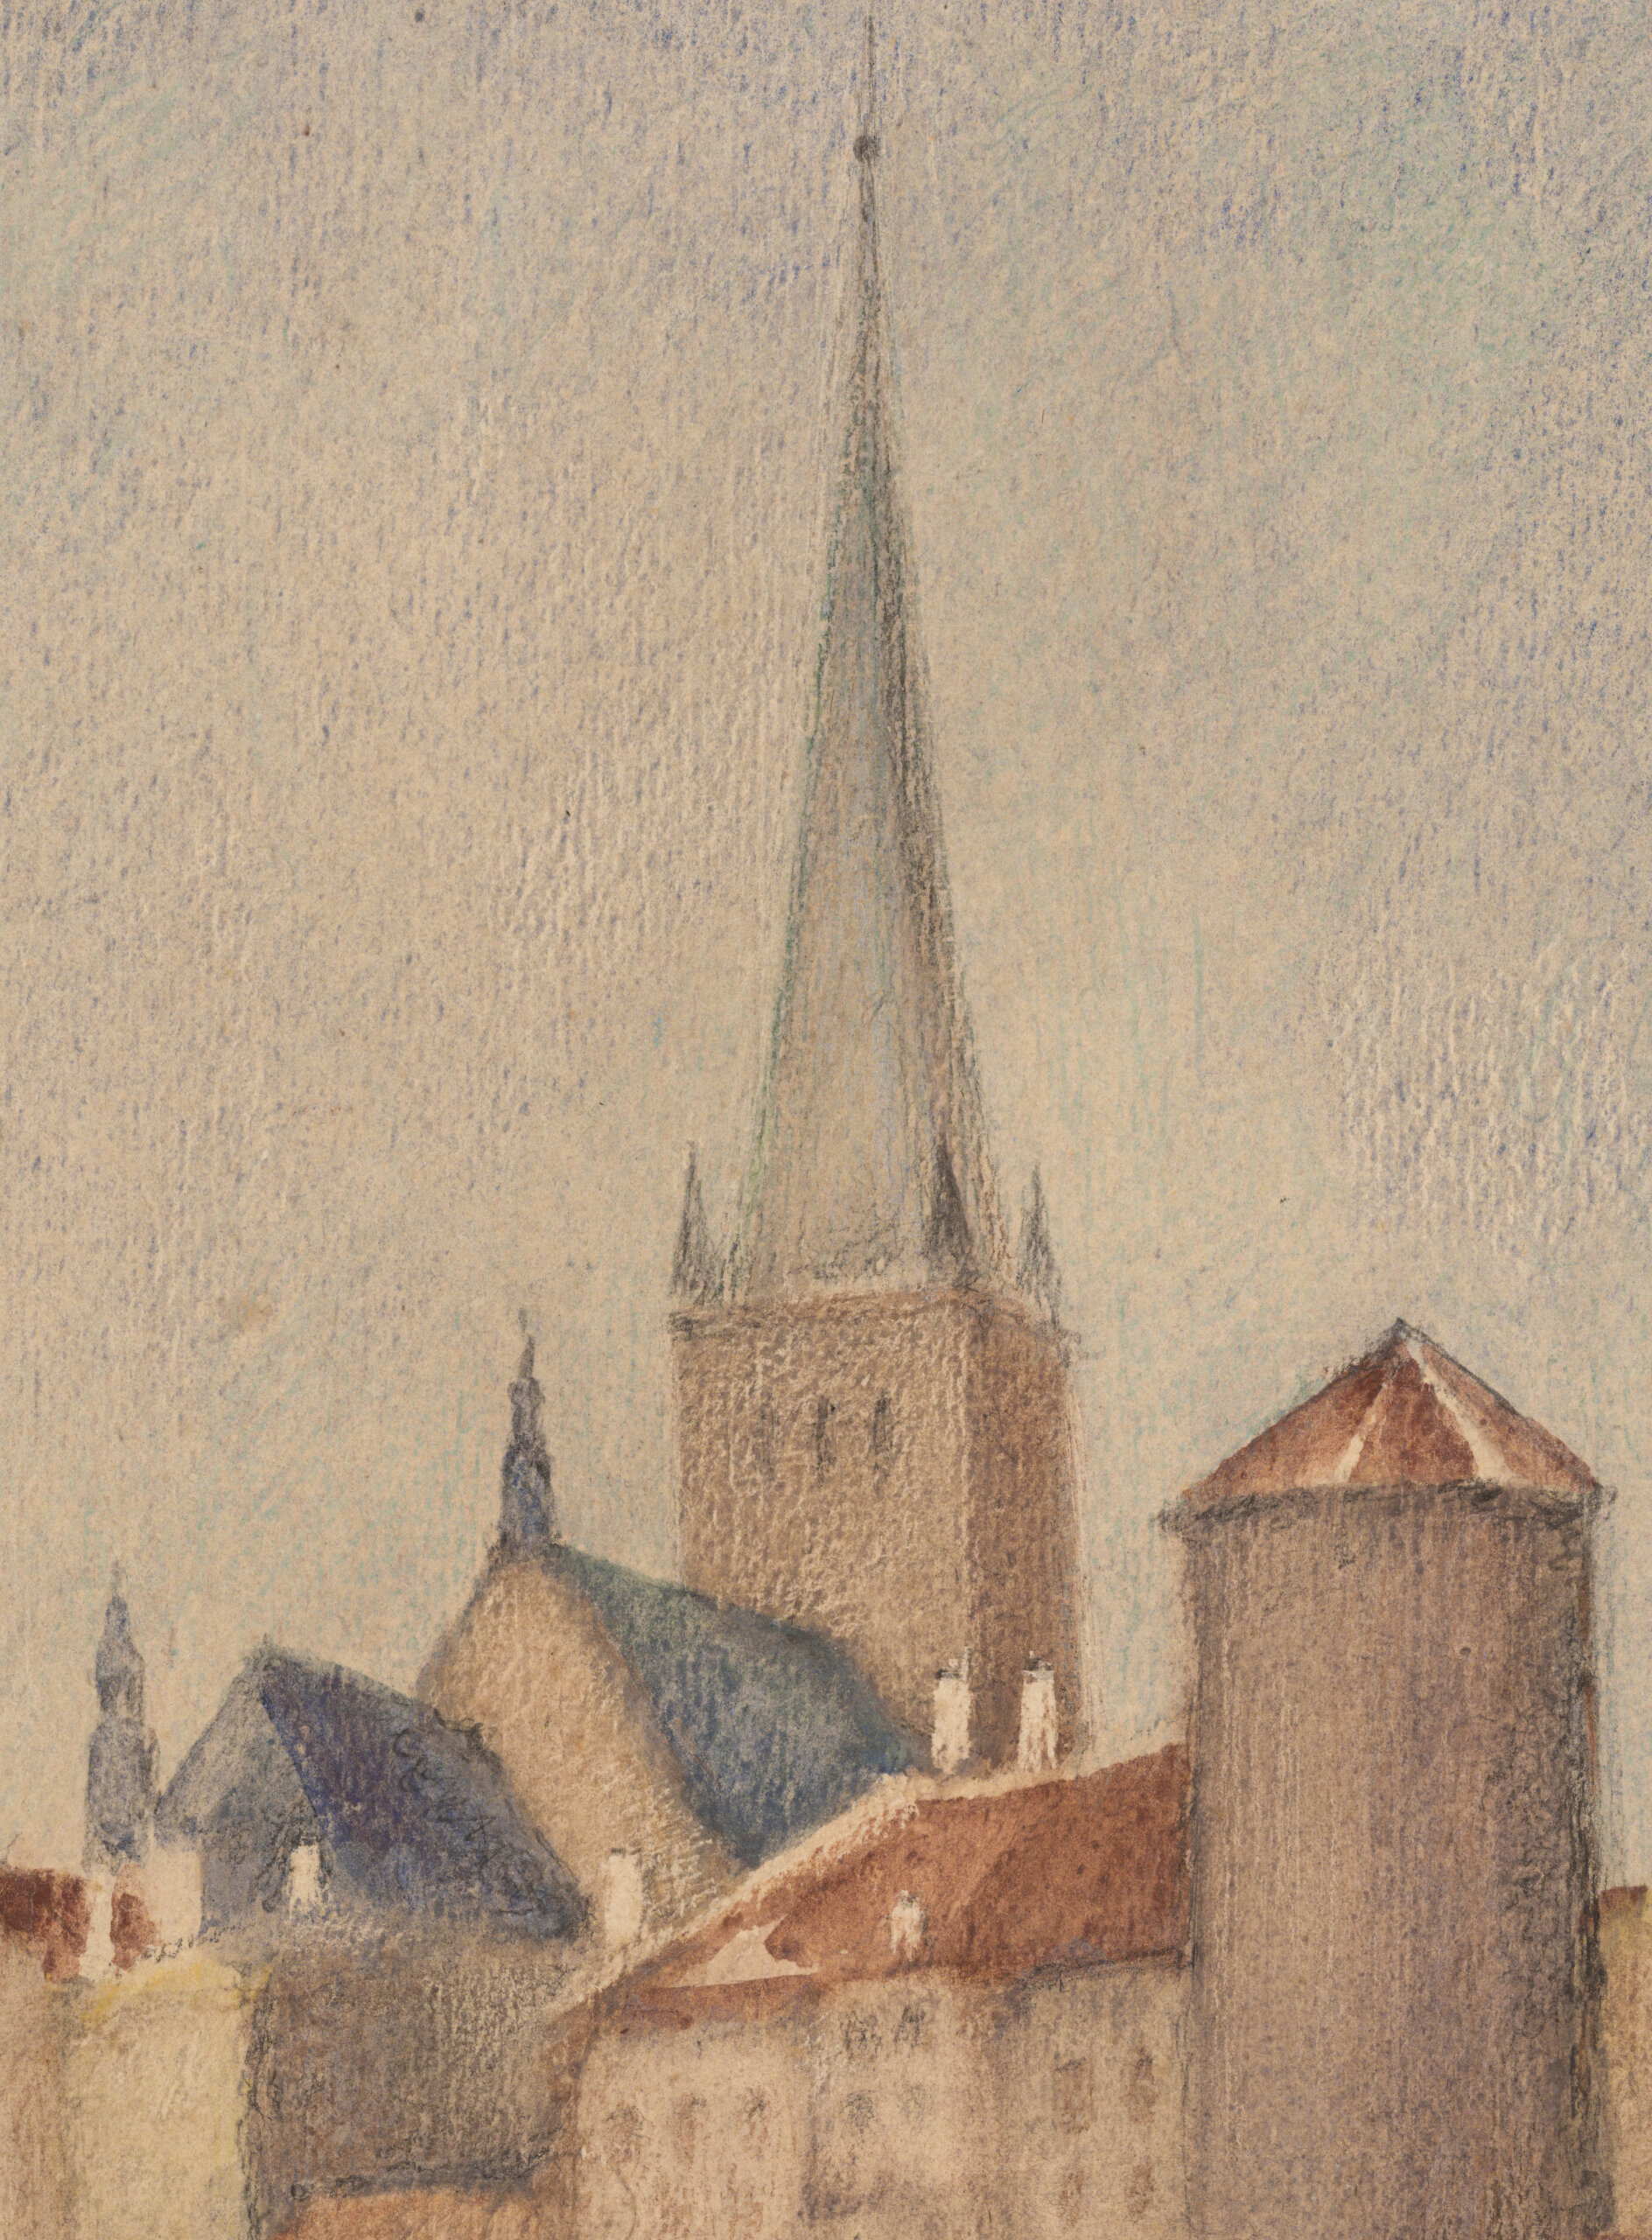 Ants Murakin “Tallinna vaade Olevistega”, 1930-ndad. 31 x 22,4 cm.